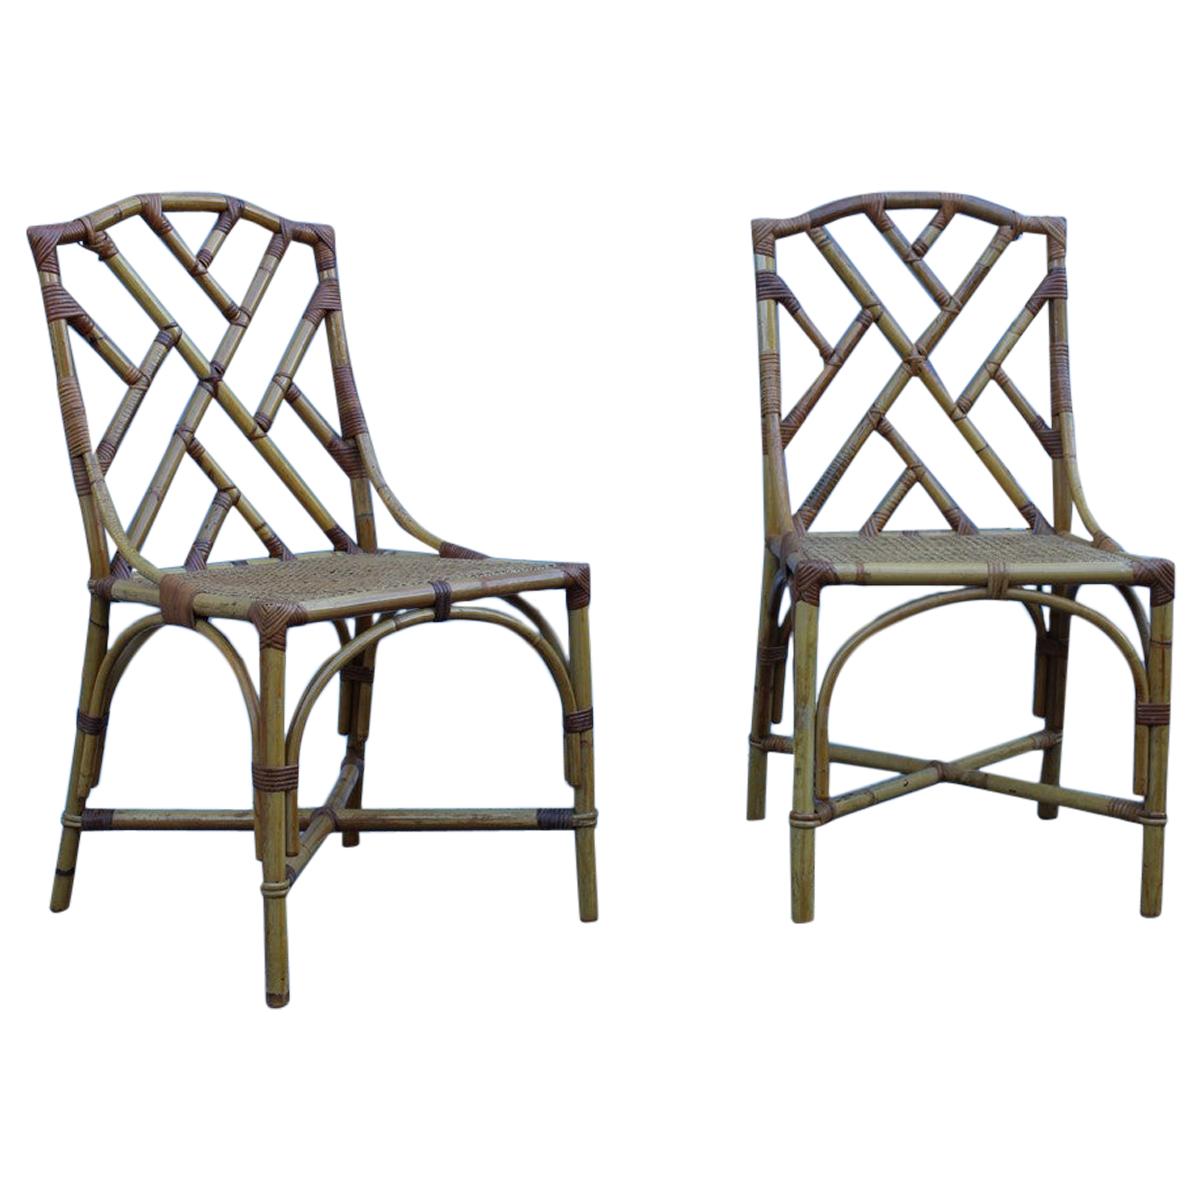 Vivai del Sud Pair of Midcentury Chairs Solid Bamboo Italian Design, 1960s